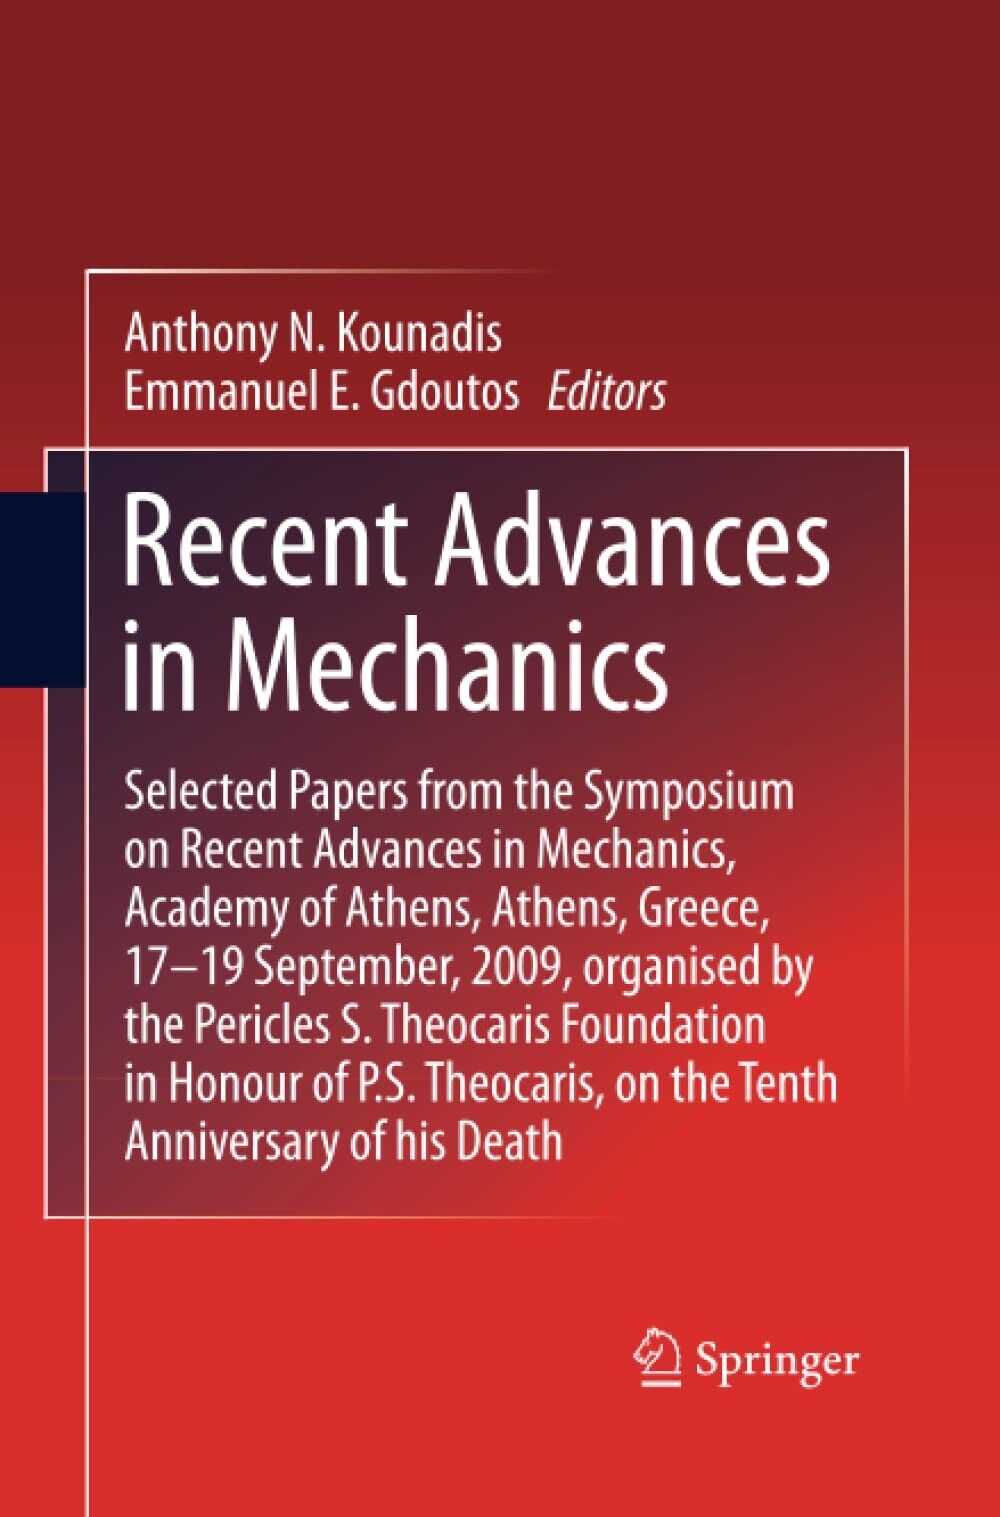 Recent Advances in Mechanics - E.E. Gdoutos - Springer, 2014 libro usato